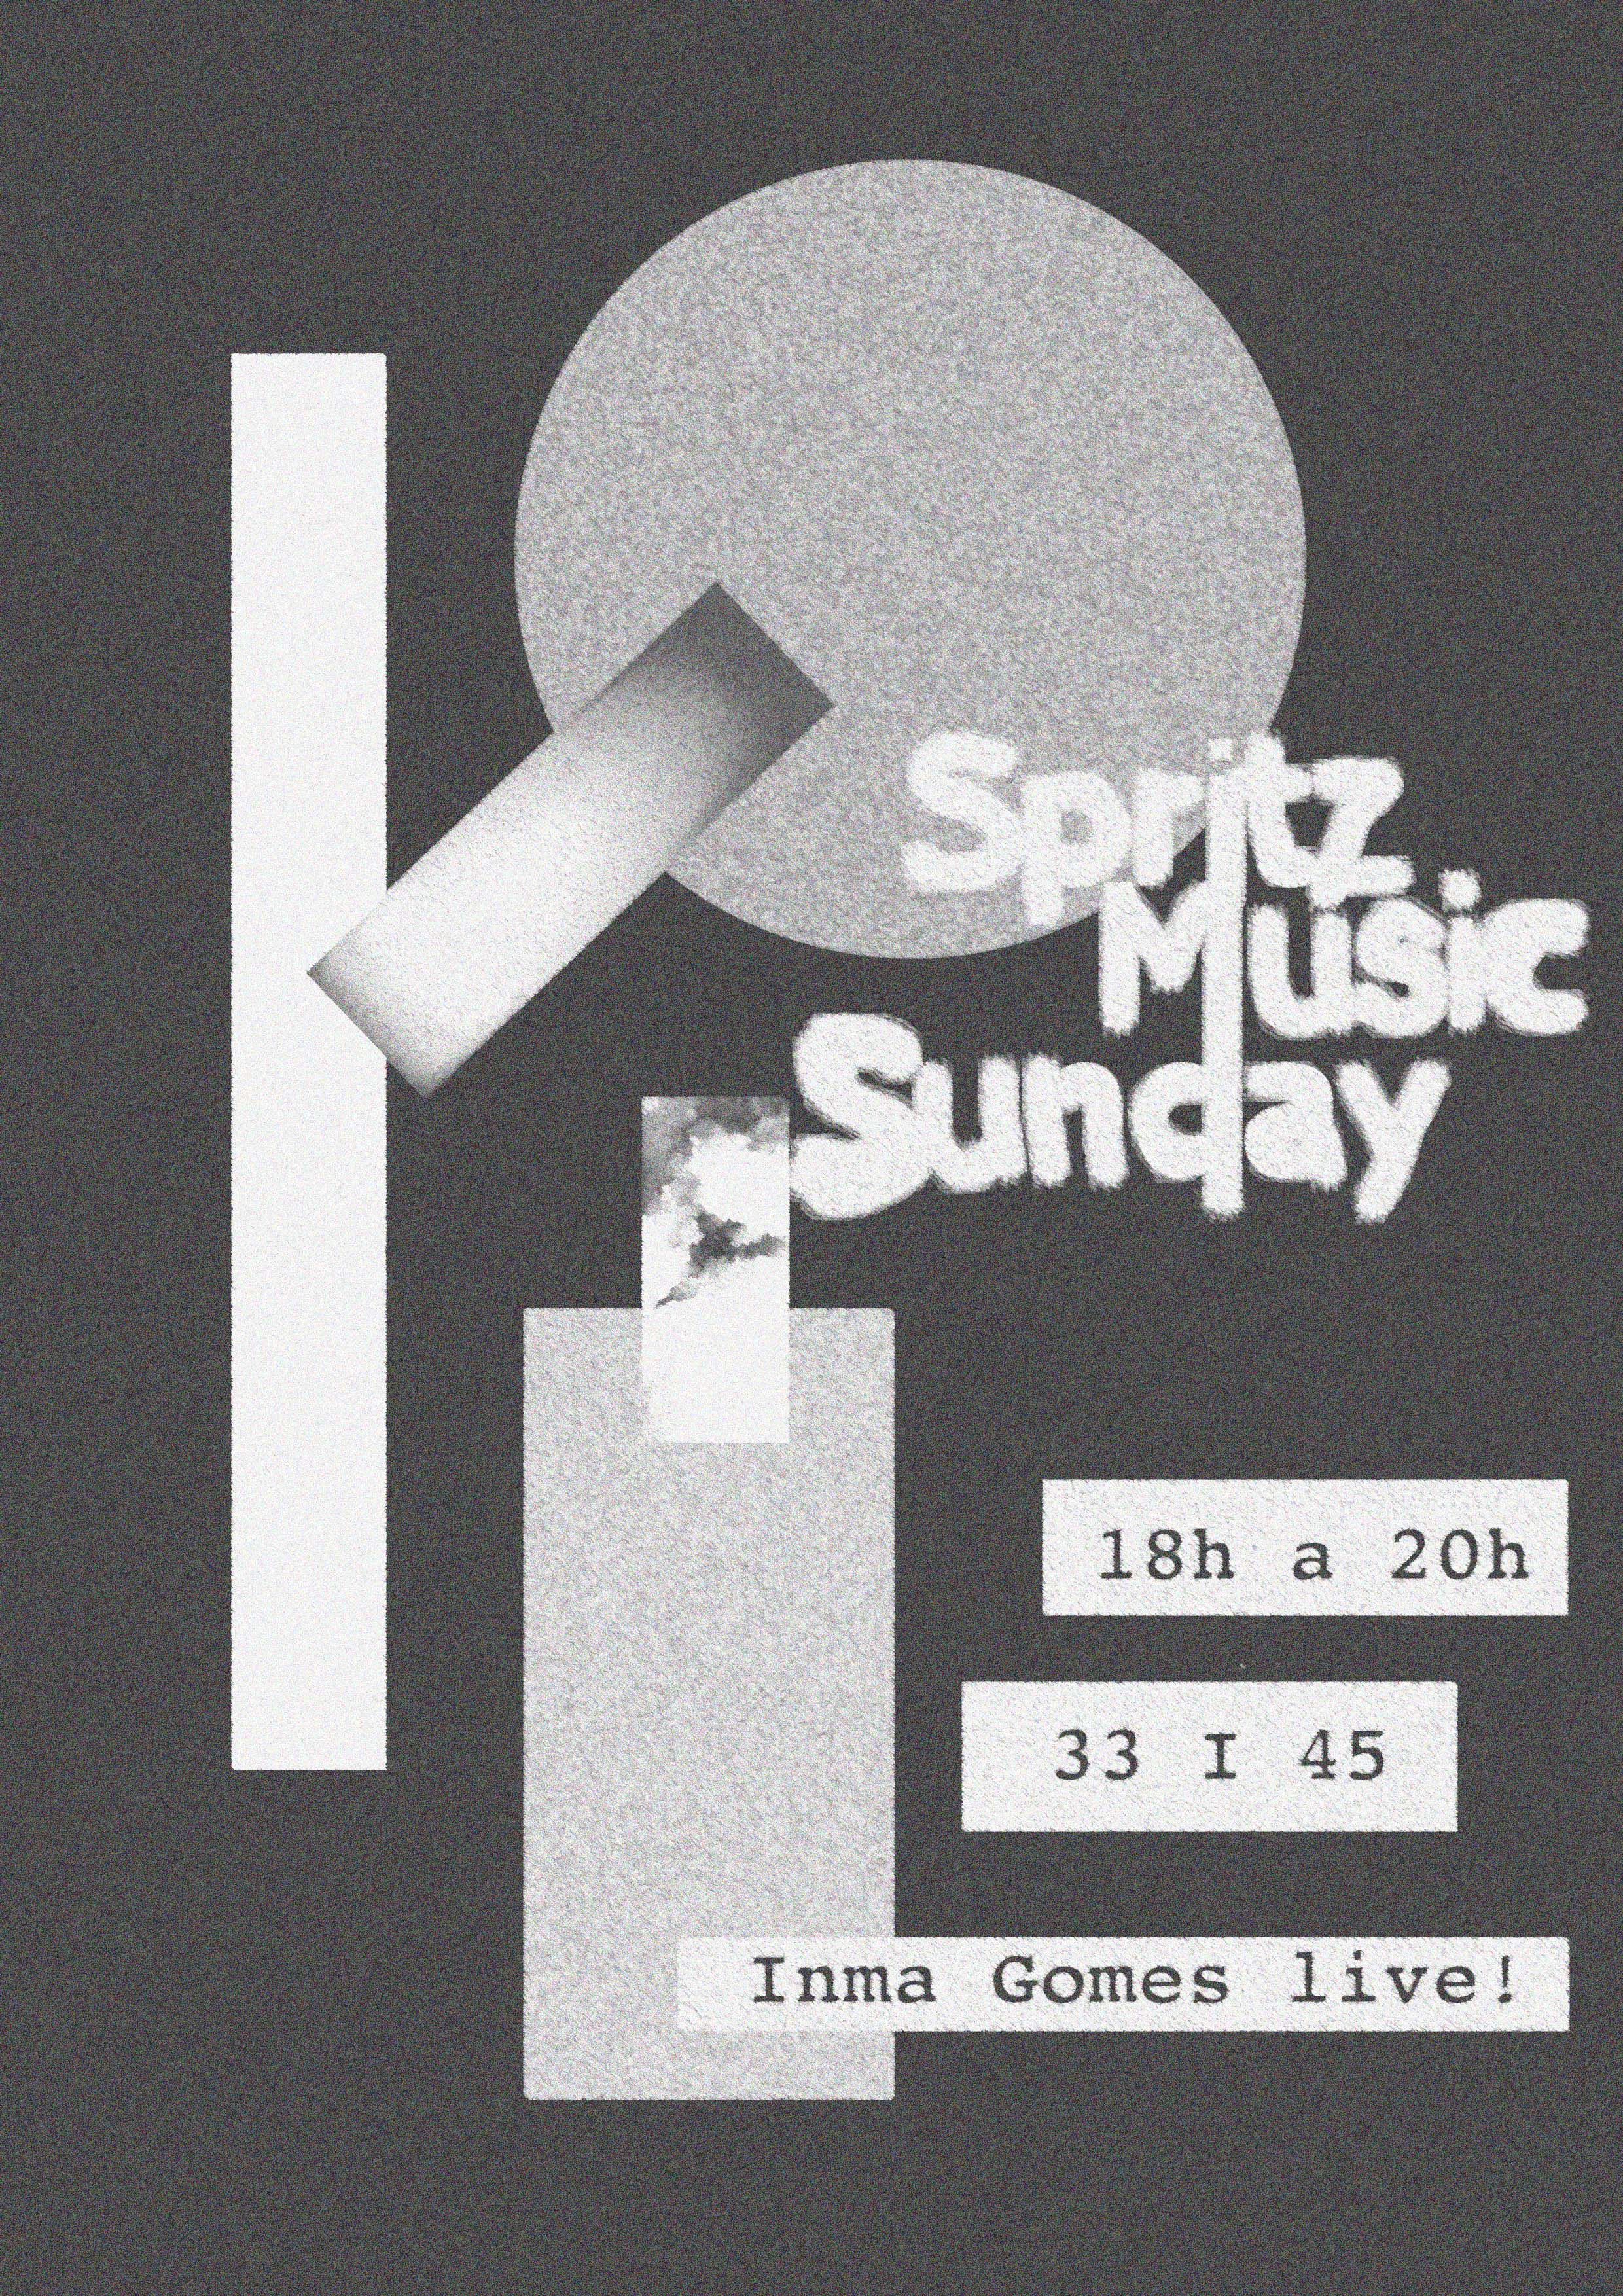 Spritz Music Sunday 